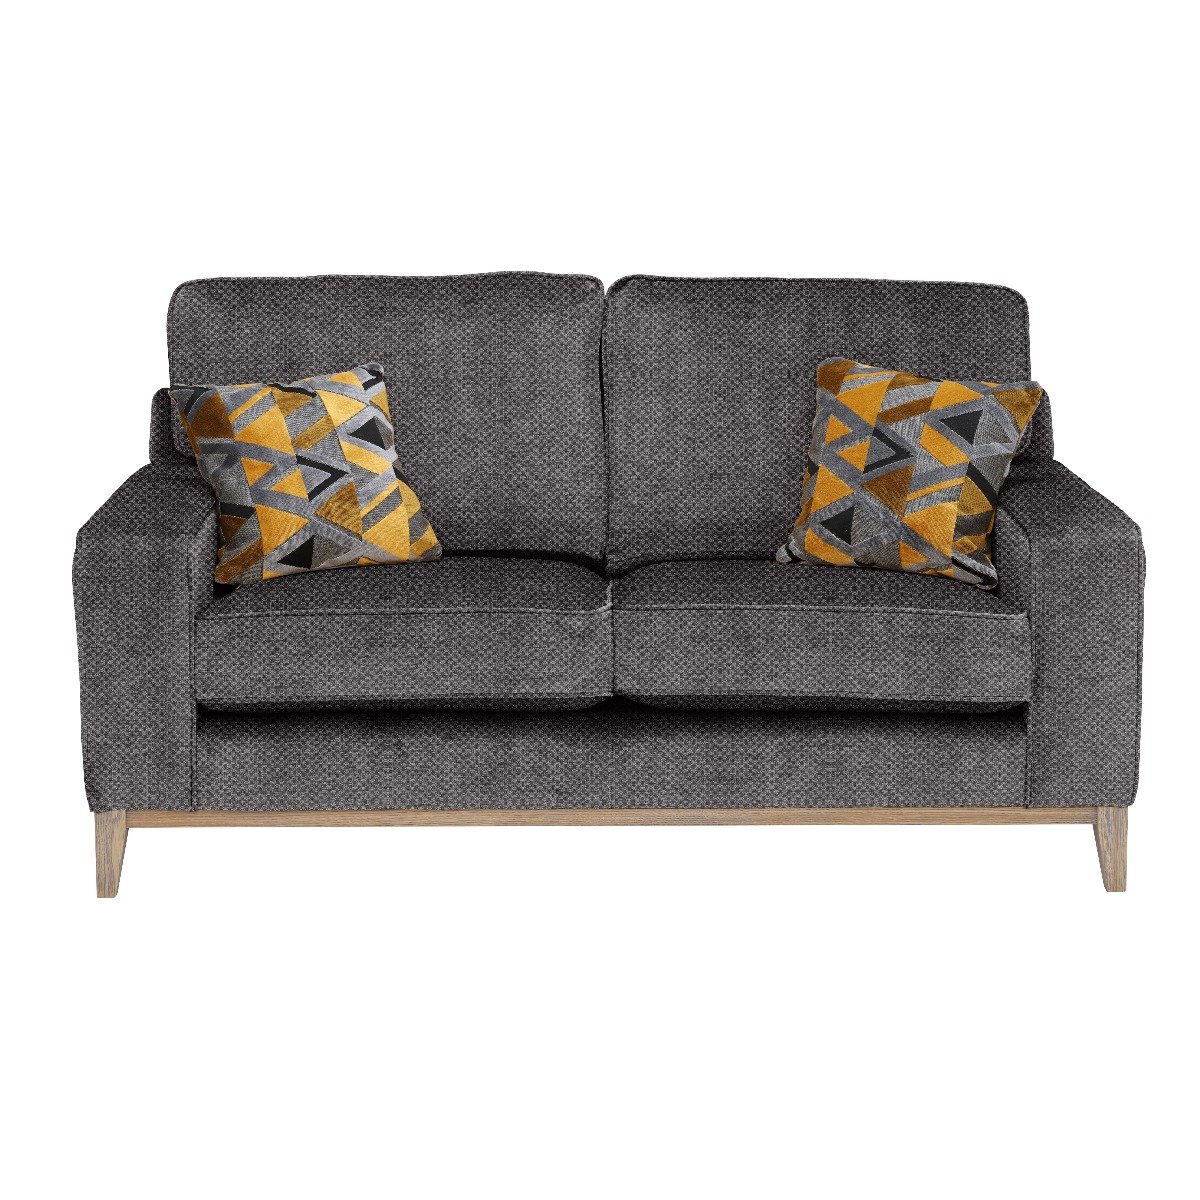 Ashton 2 Seater Sofa, Grey | Barker & Stonehouse